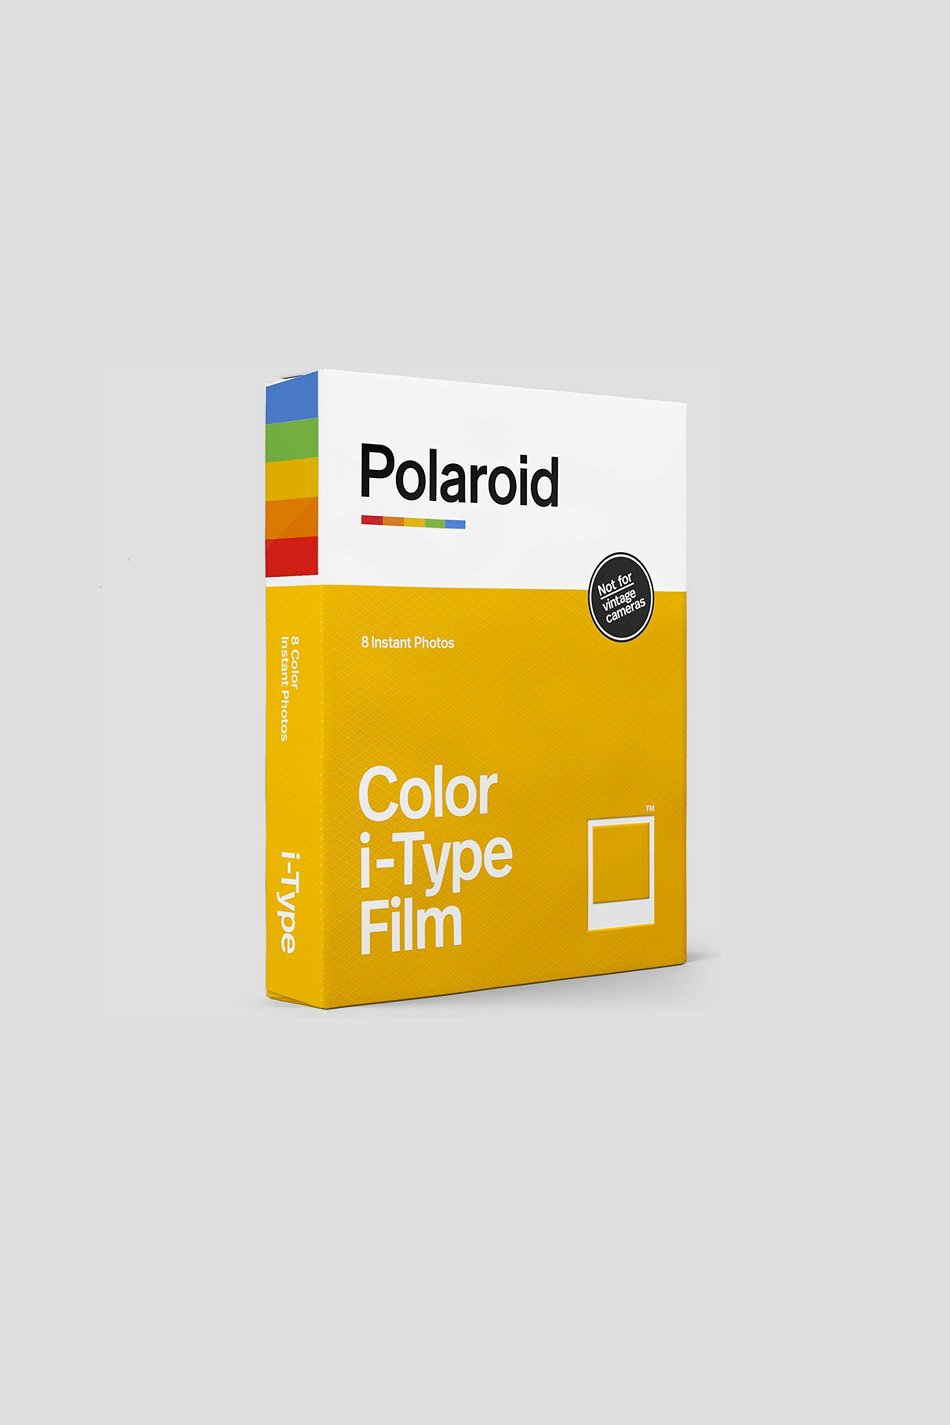 Polaroid Color I-Type Film